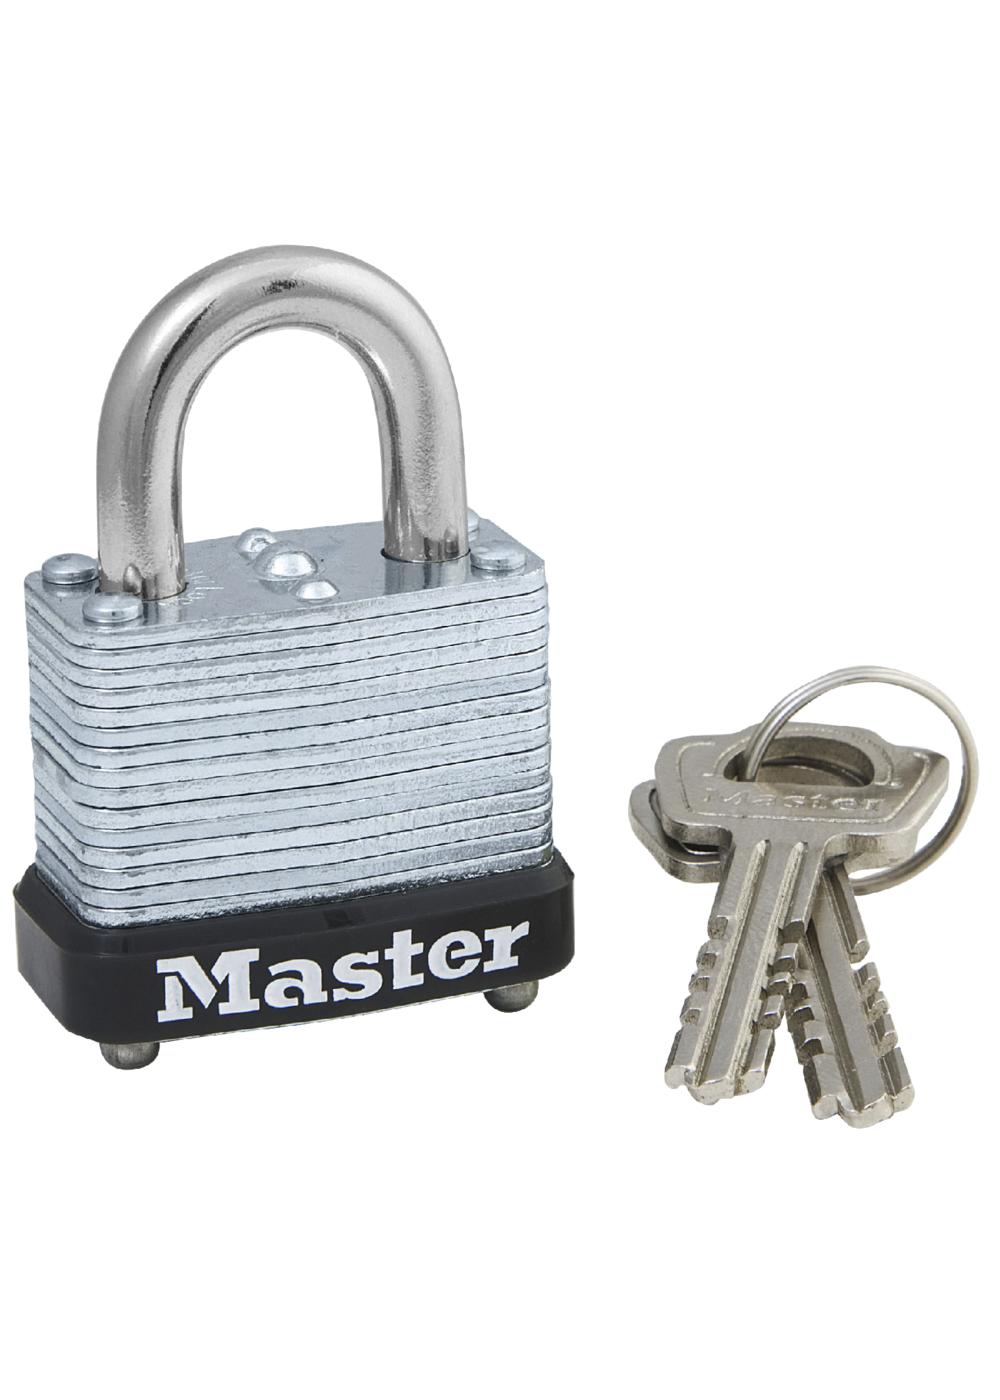 Master Lock 105D Laminated Padlock; image 2 of 2